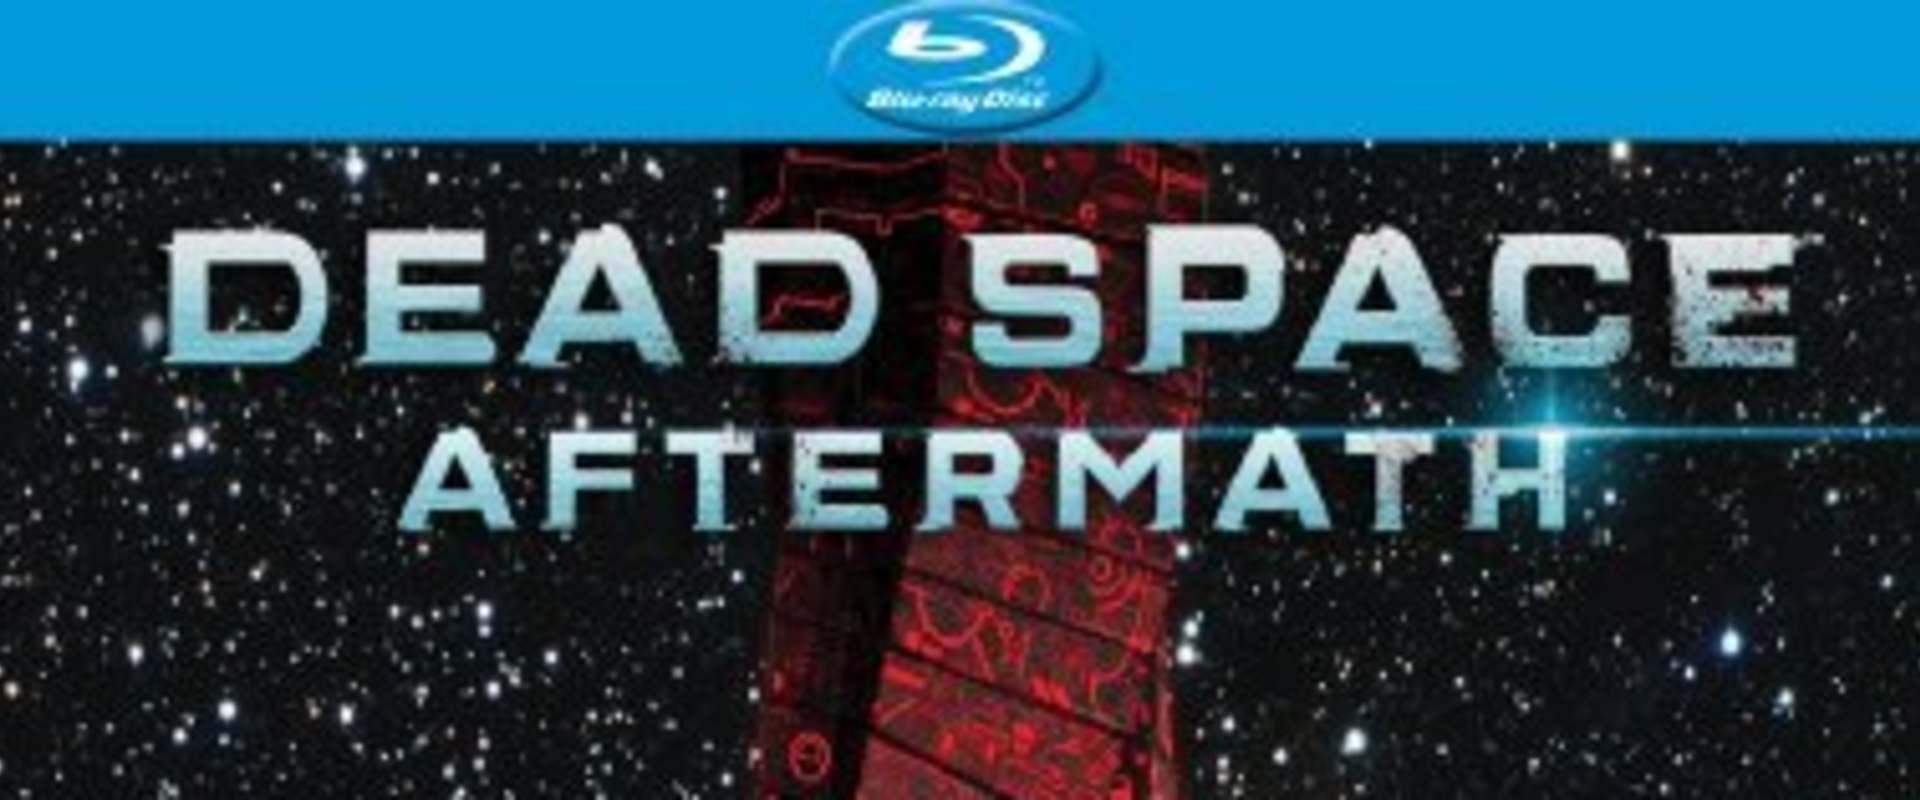 imdb dead space aftermath